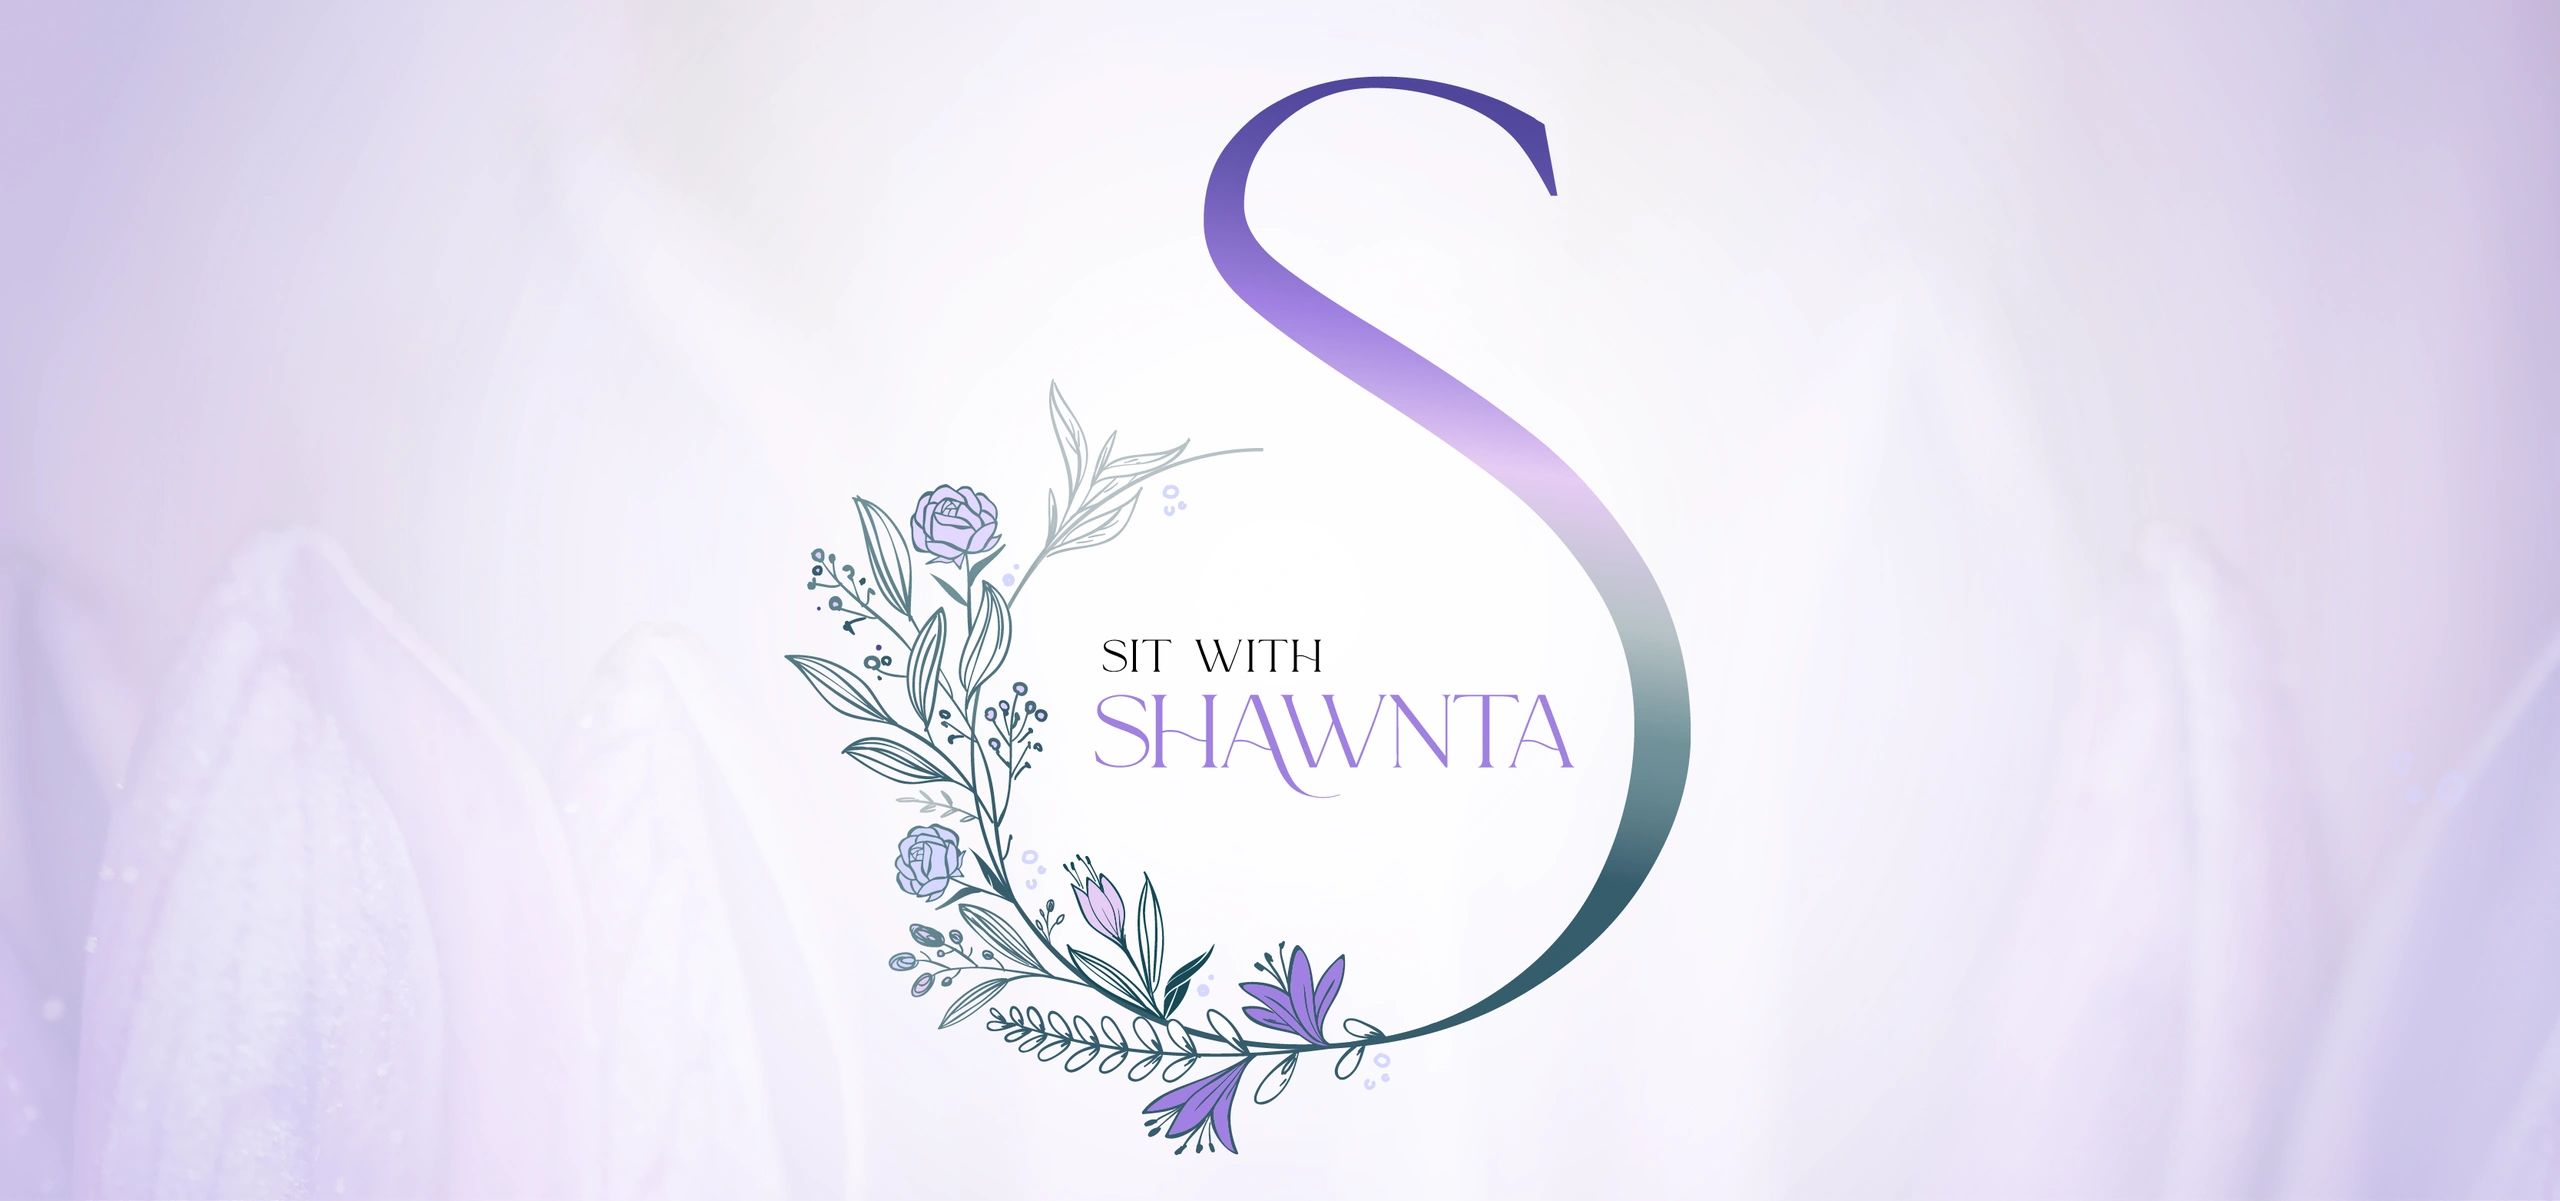 Sit with Shawnta logo.  Floral background courtesy of Dustin Humes via unsplash.com.